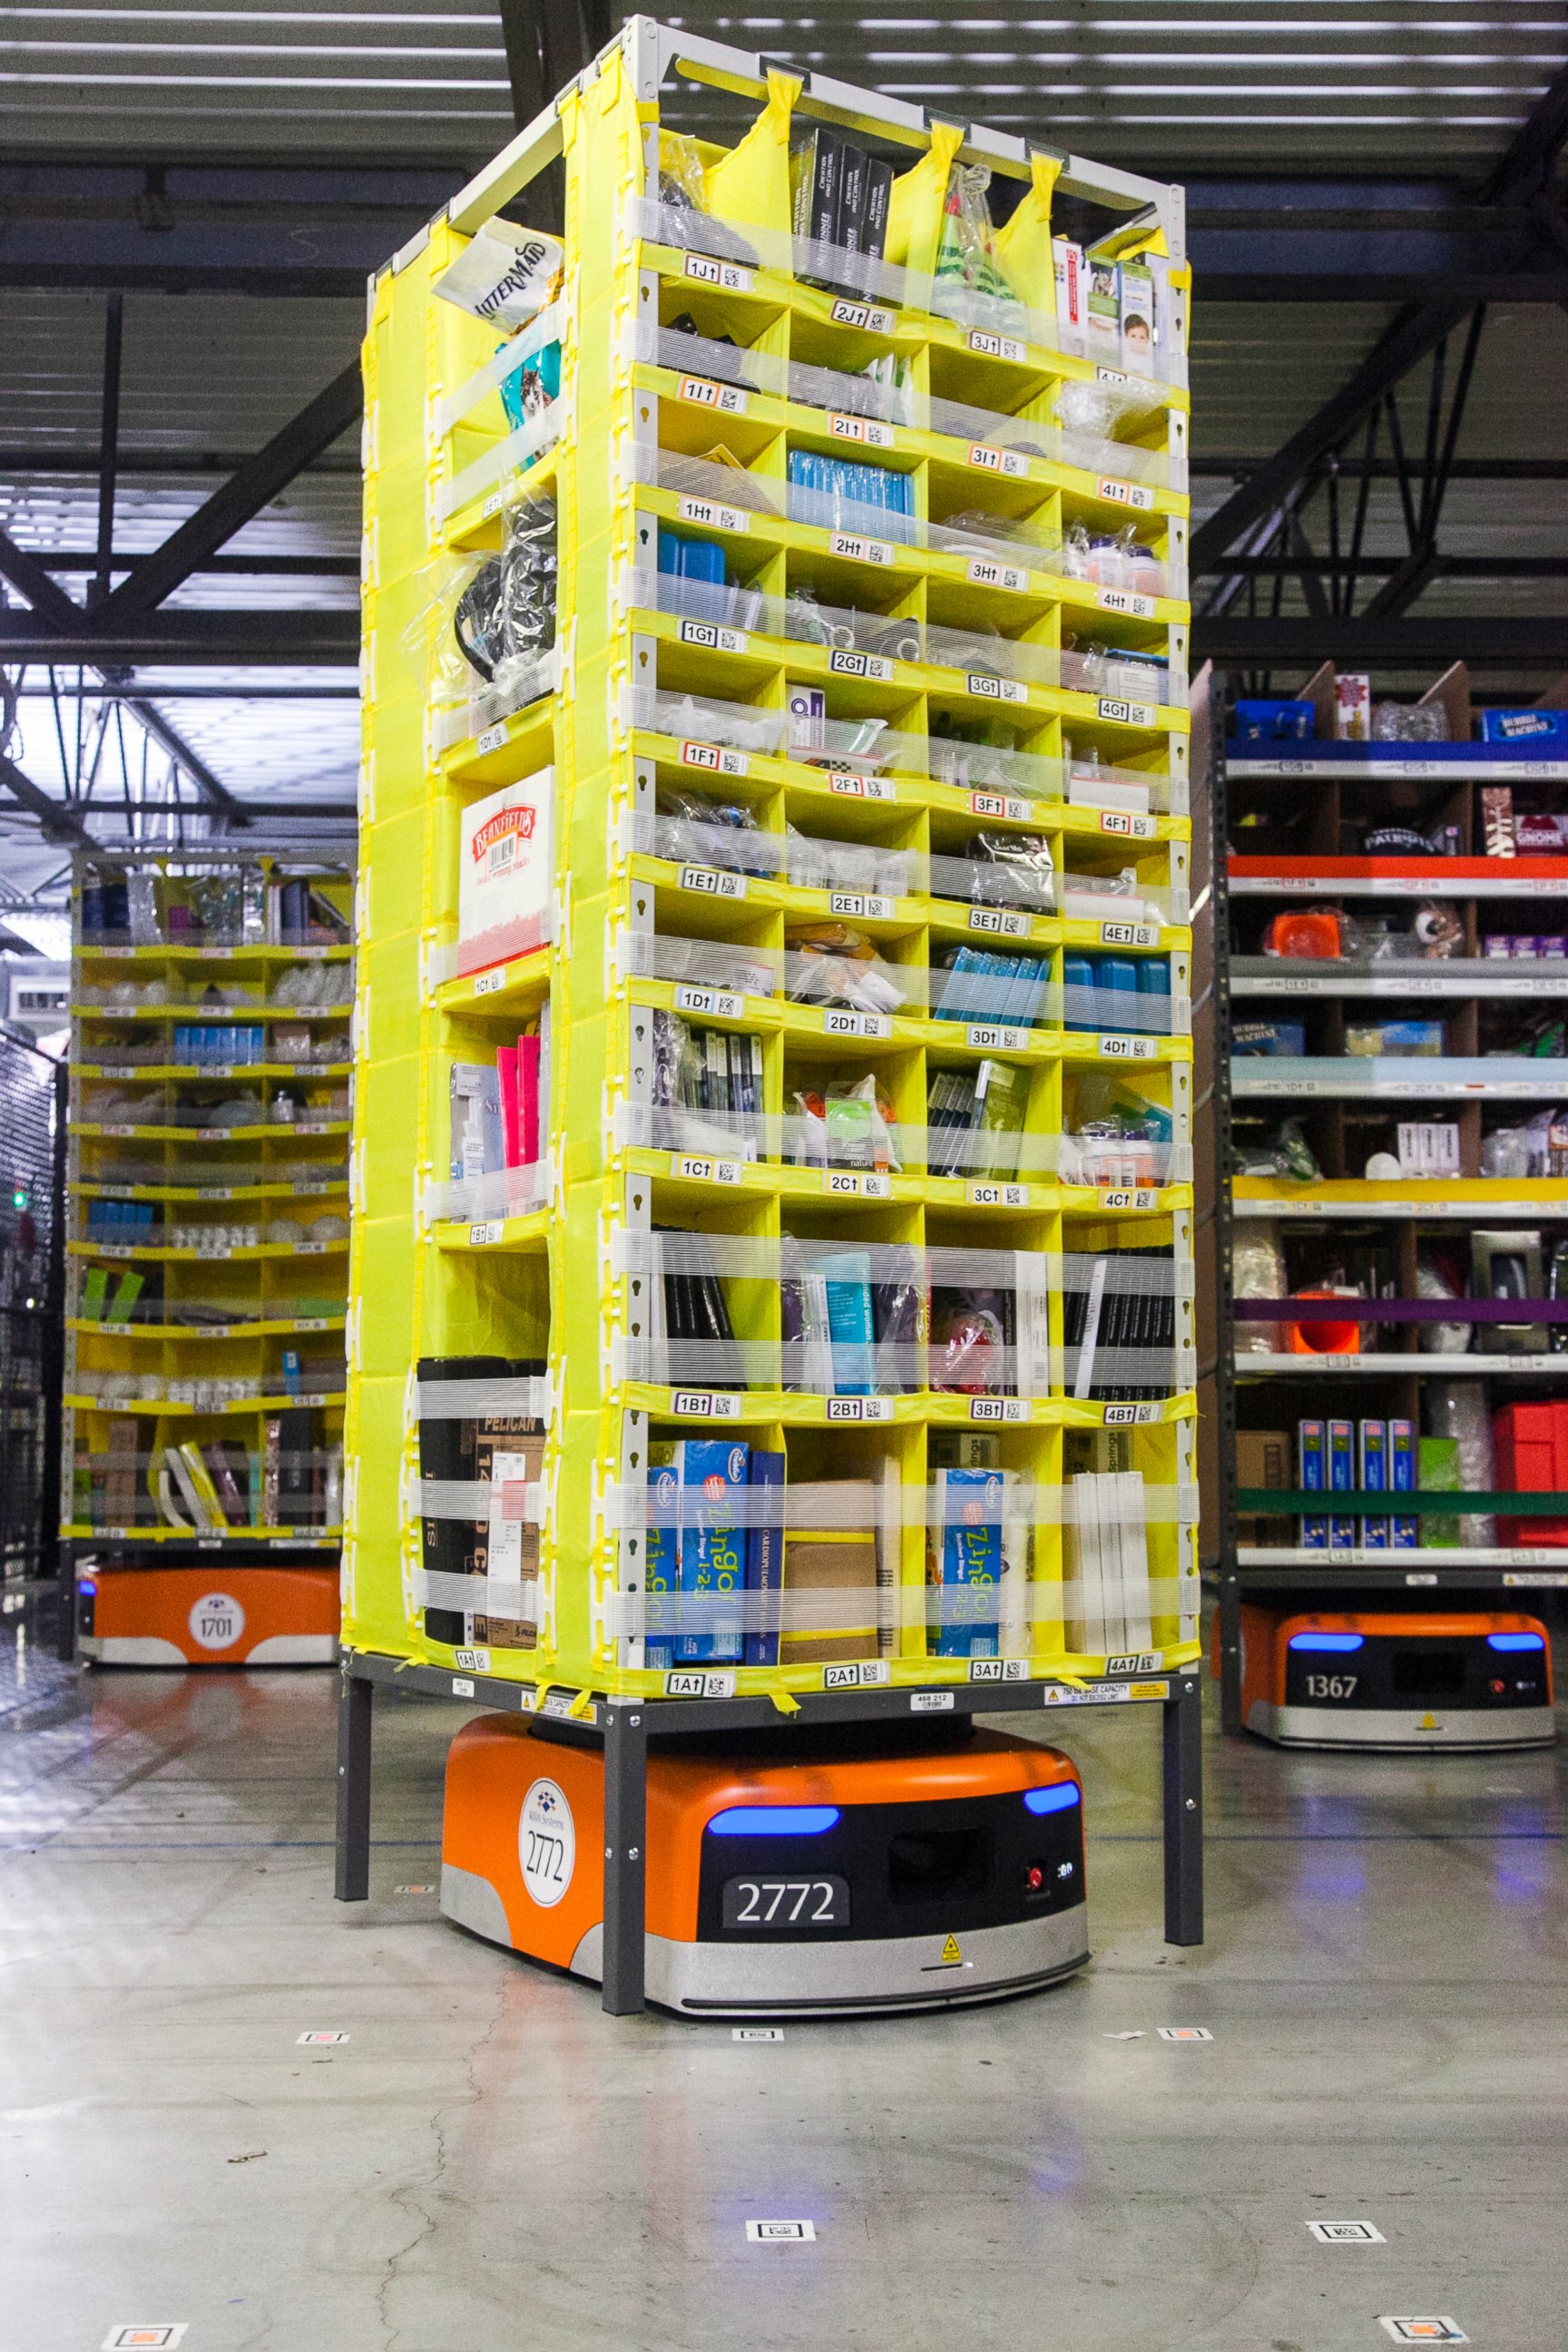 PHOTO: Amazon's Kiva robots are working to help expedite customer orders.